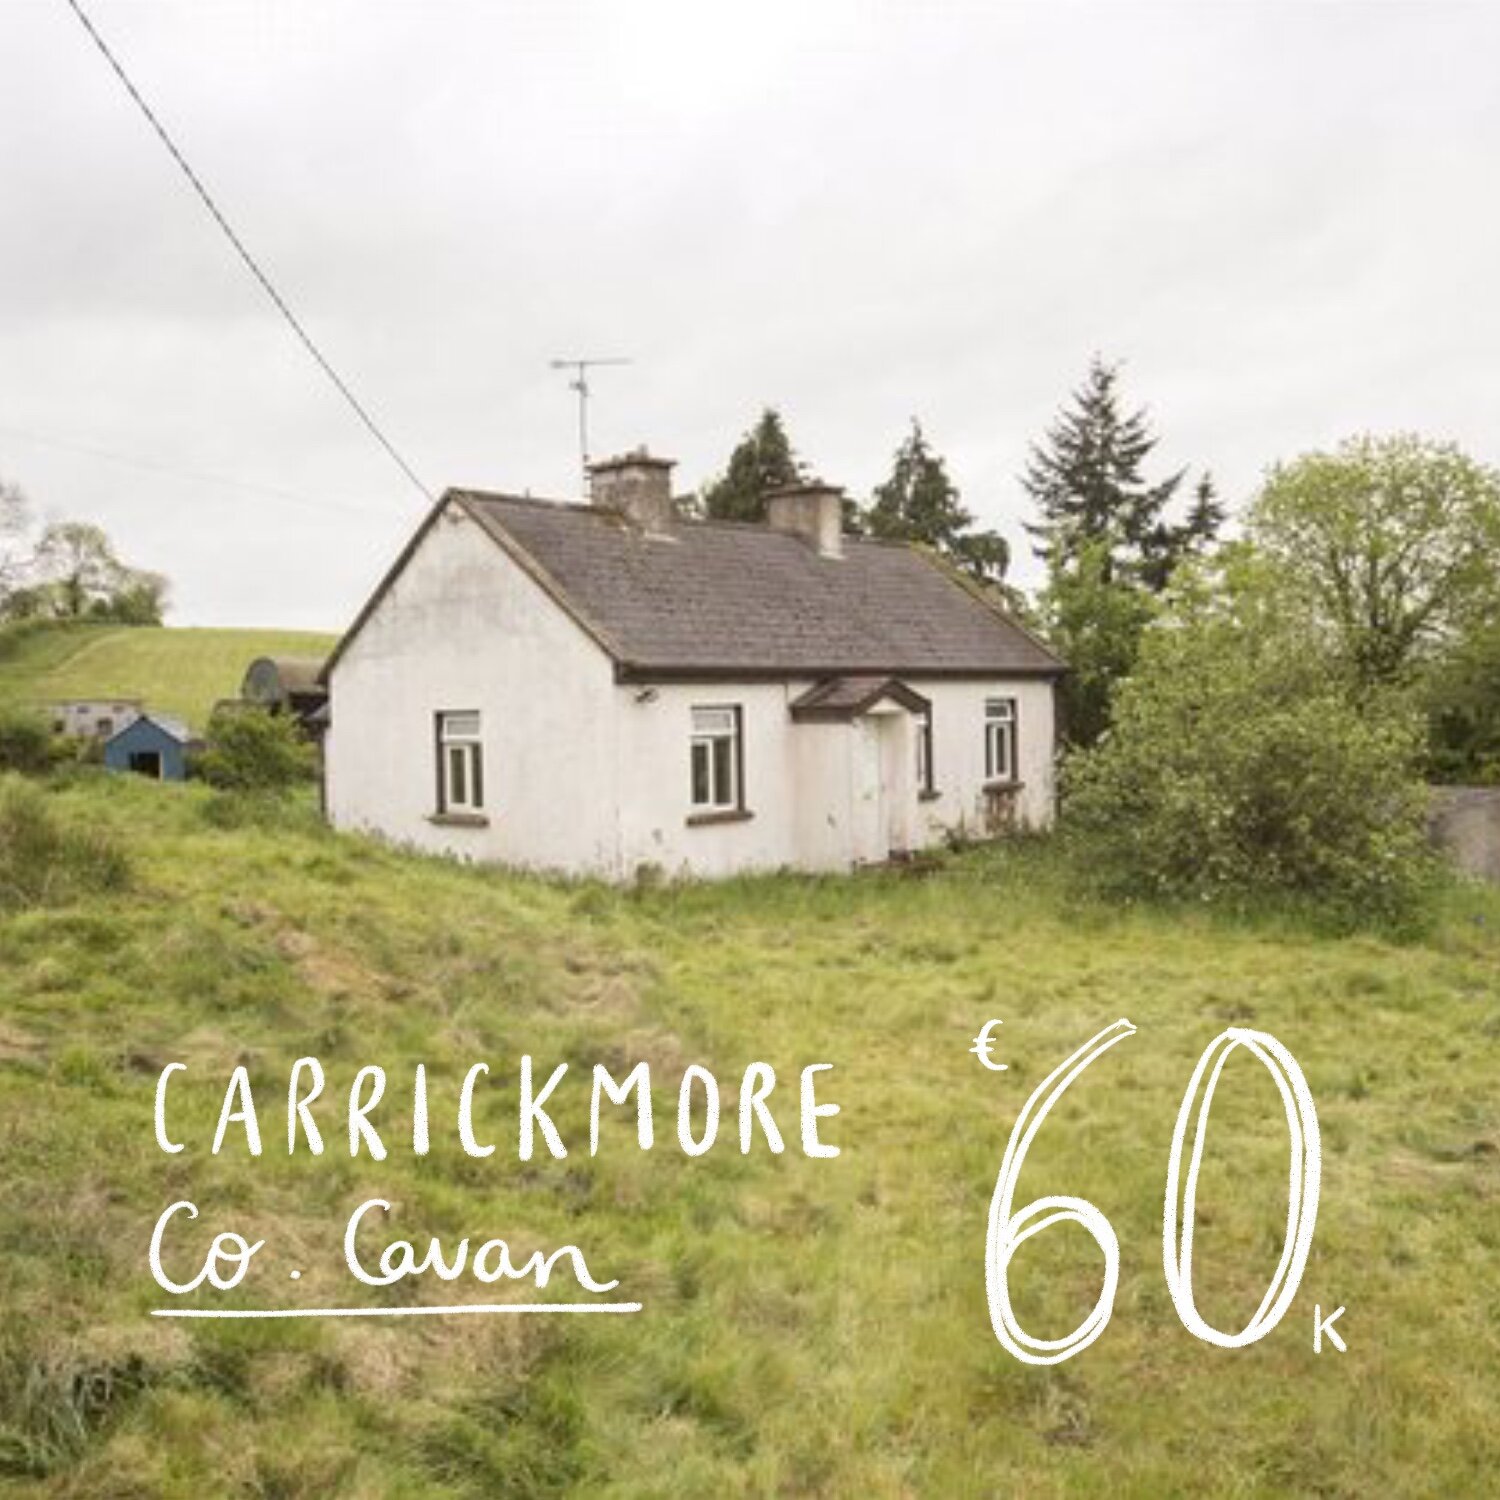 Carrickmore, Co. Cavan. €60k